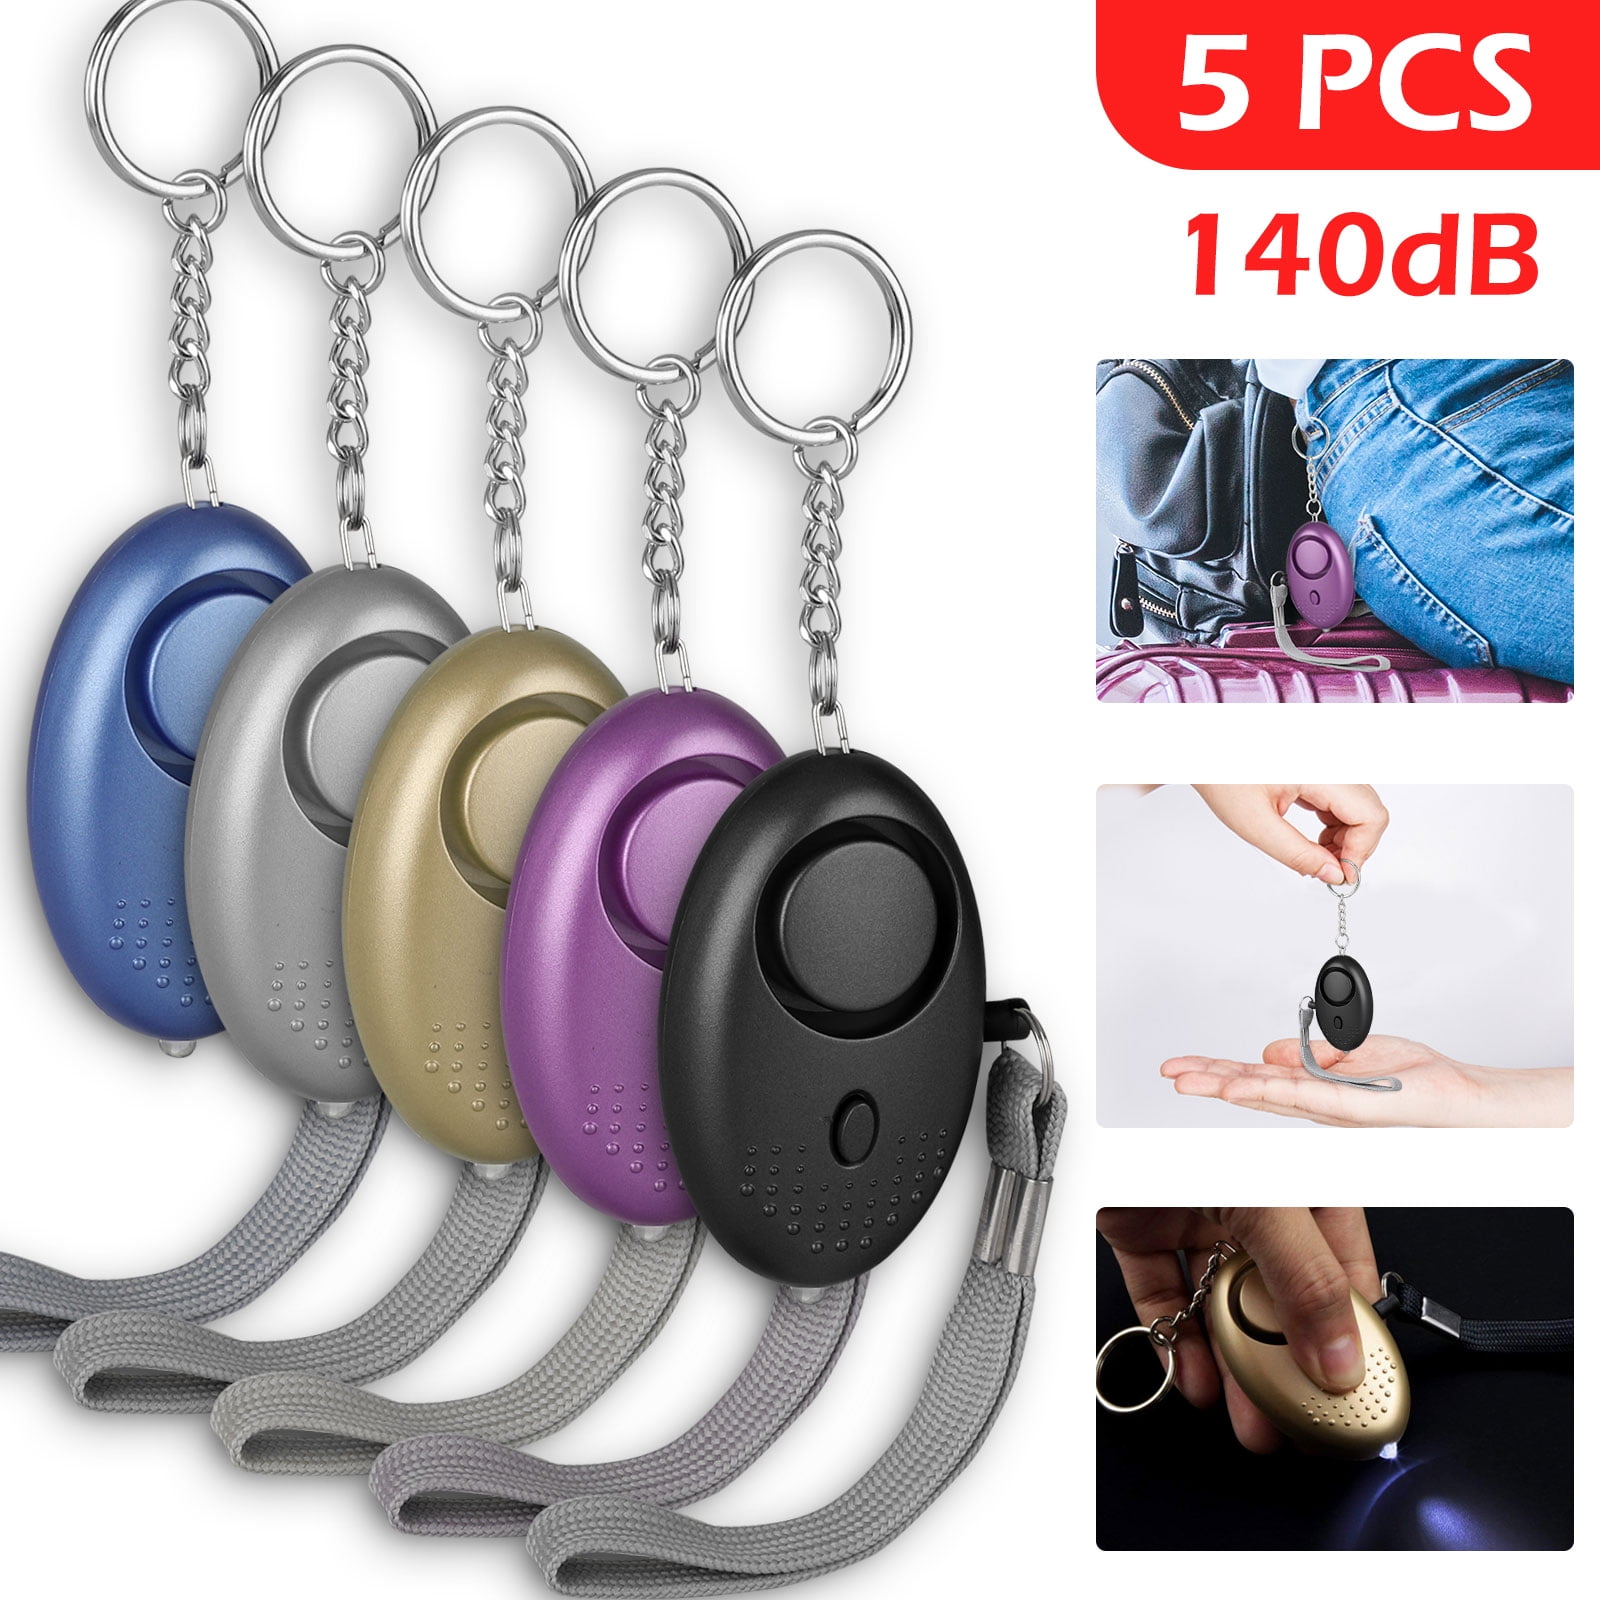 5Pcs Safe Sound Personal Alarm Keychain Loud Alert LED Light 140db Self-Defense 